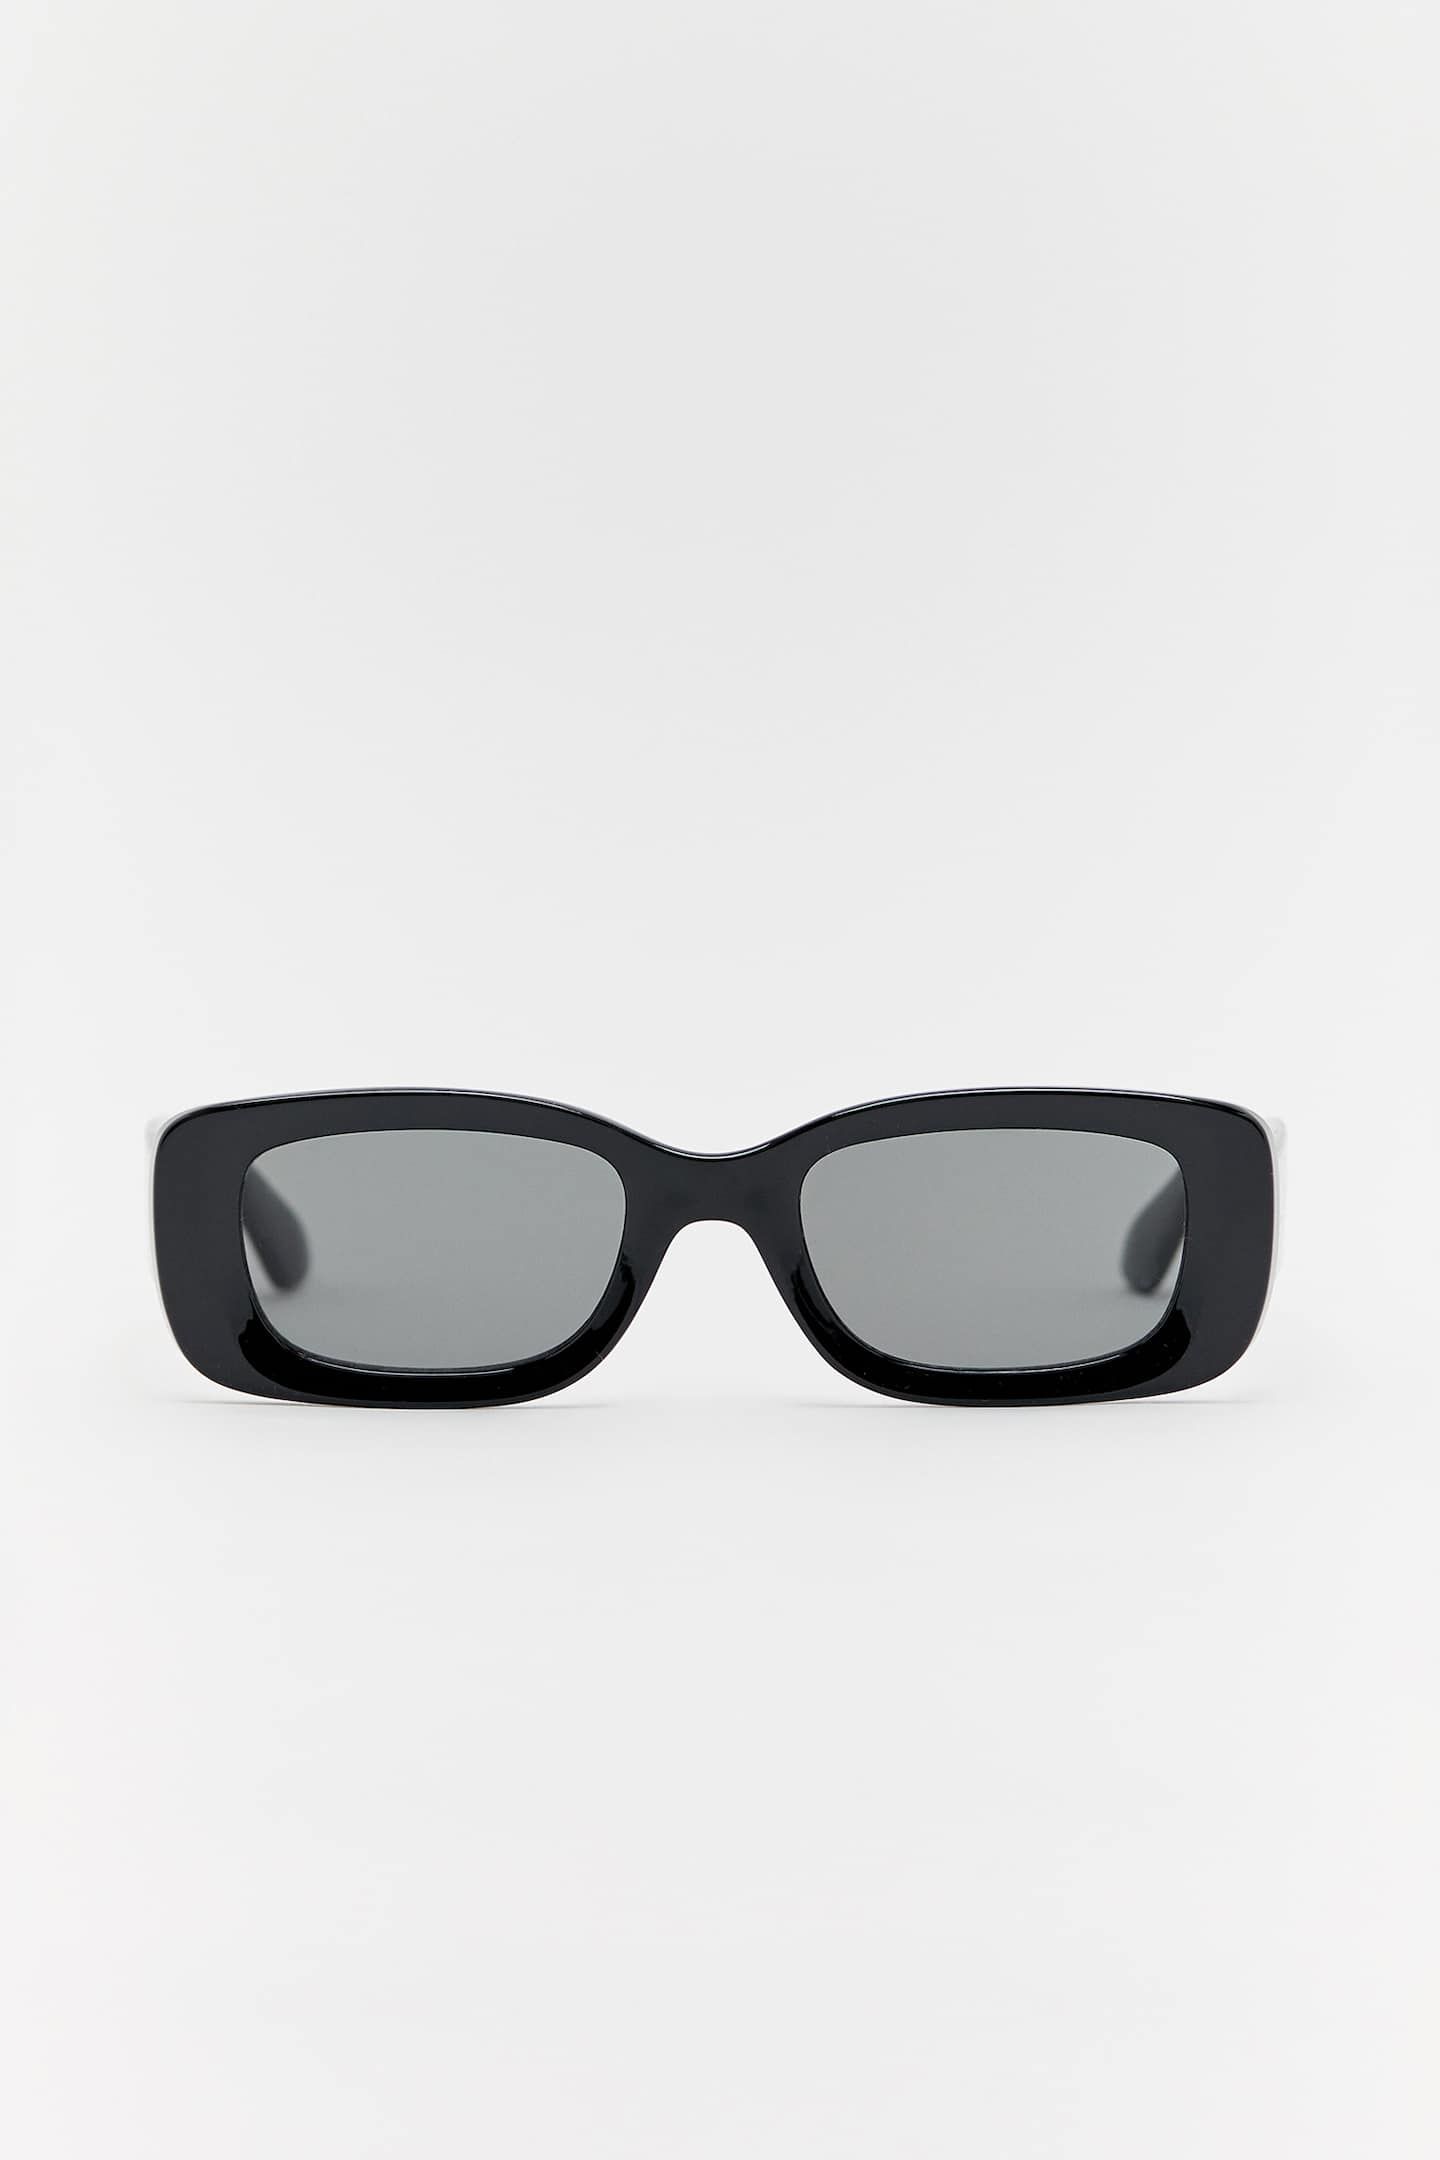 Basic rectangular sunglasses | PULL and BEAR UK